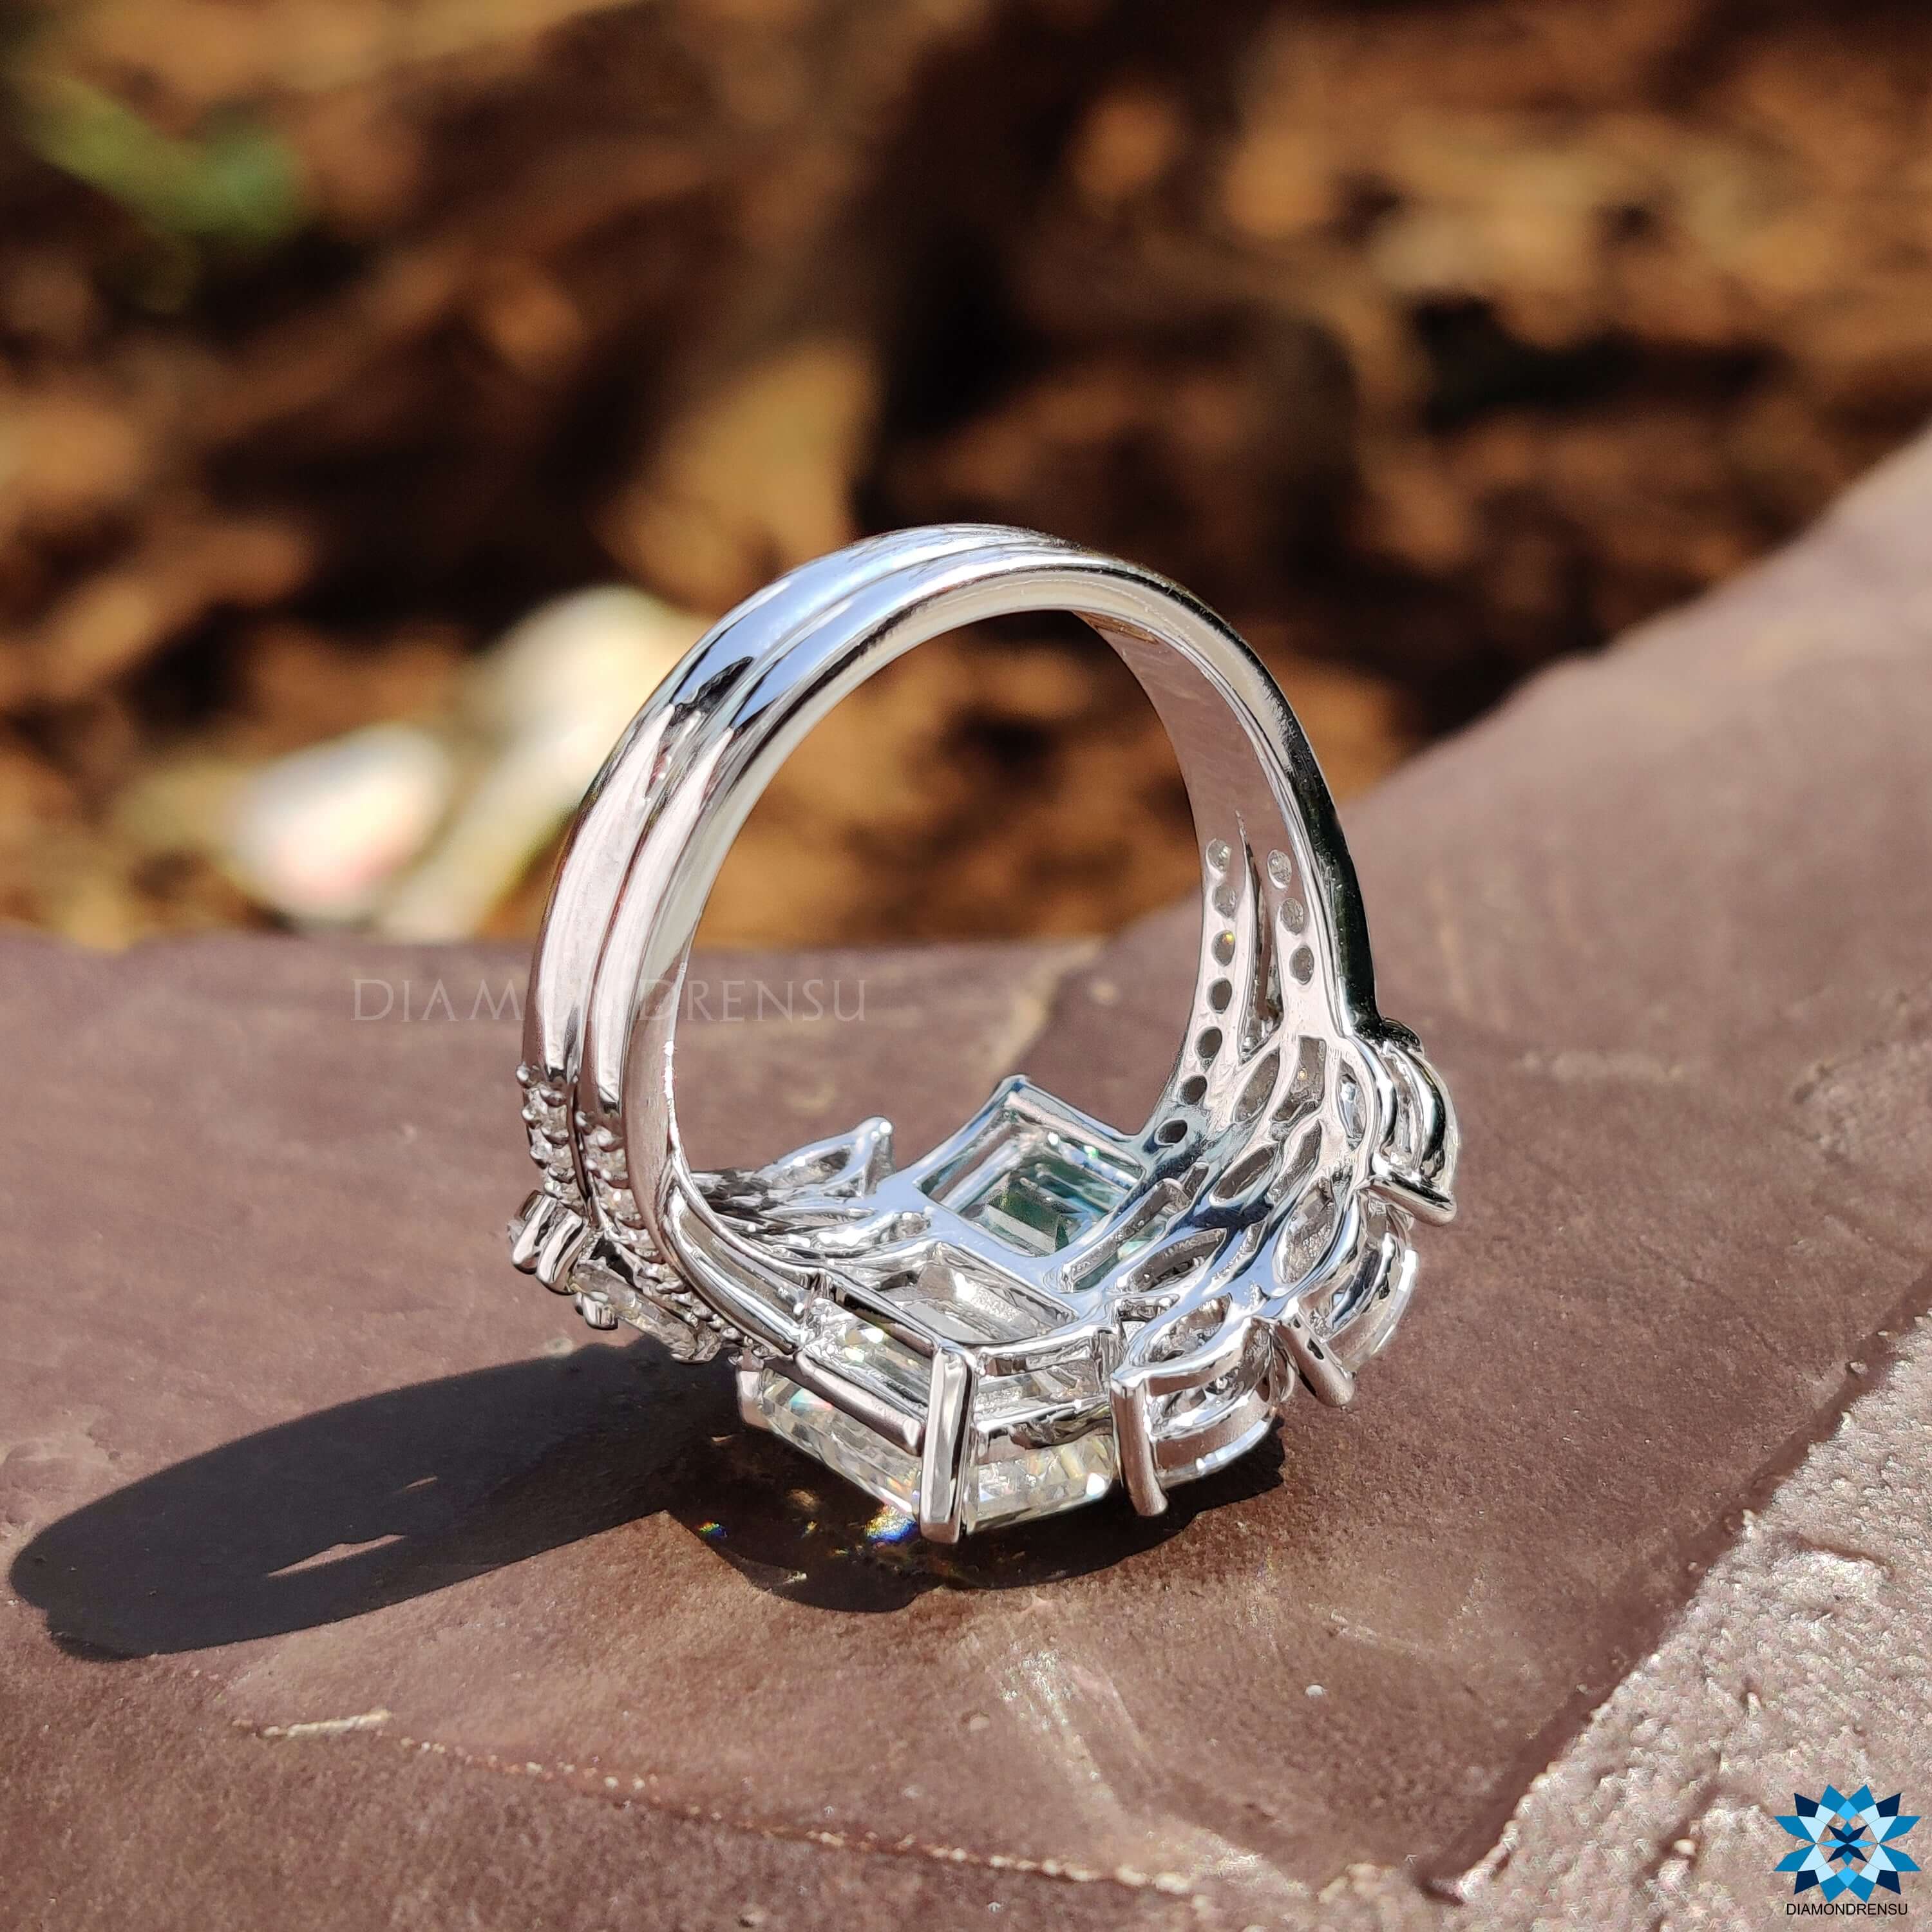 customized moissanite ring - diamondrensu